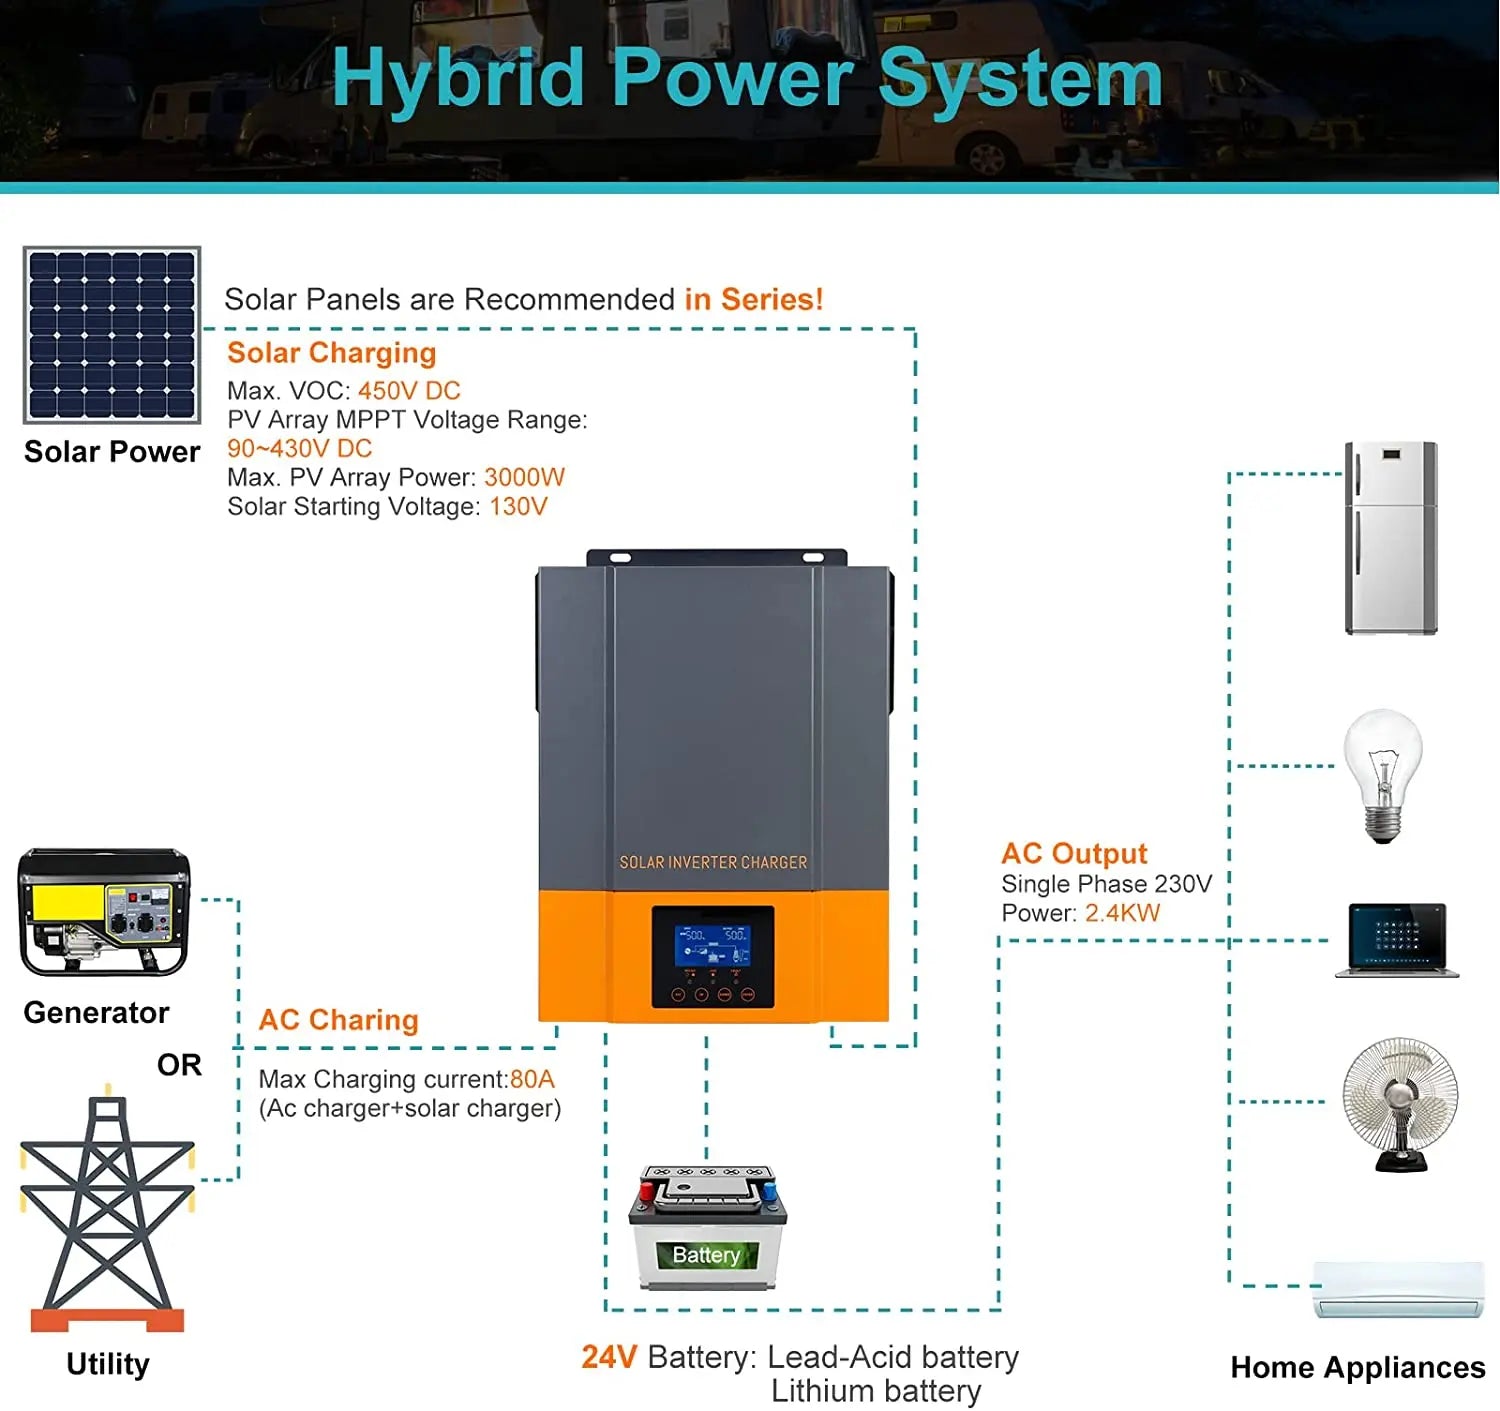 PowMr Hybrid Solar Inverter, Solar Inverter for Hybrid Power Systems, 450V DC, 3000W, MPPT, Single-Phase AC Output, 2.4kW.